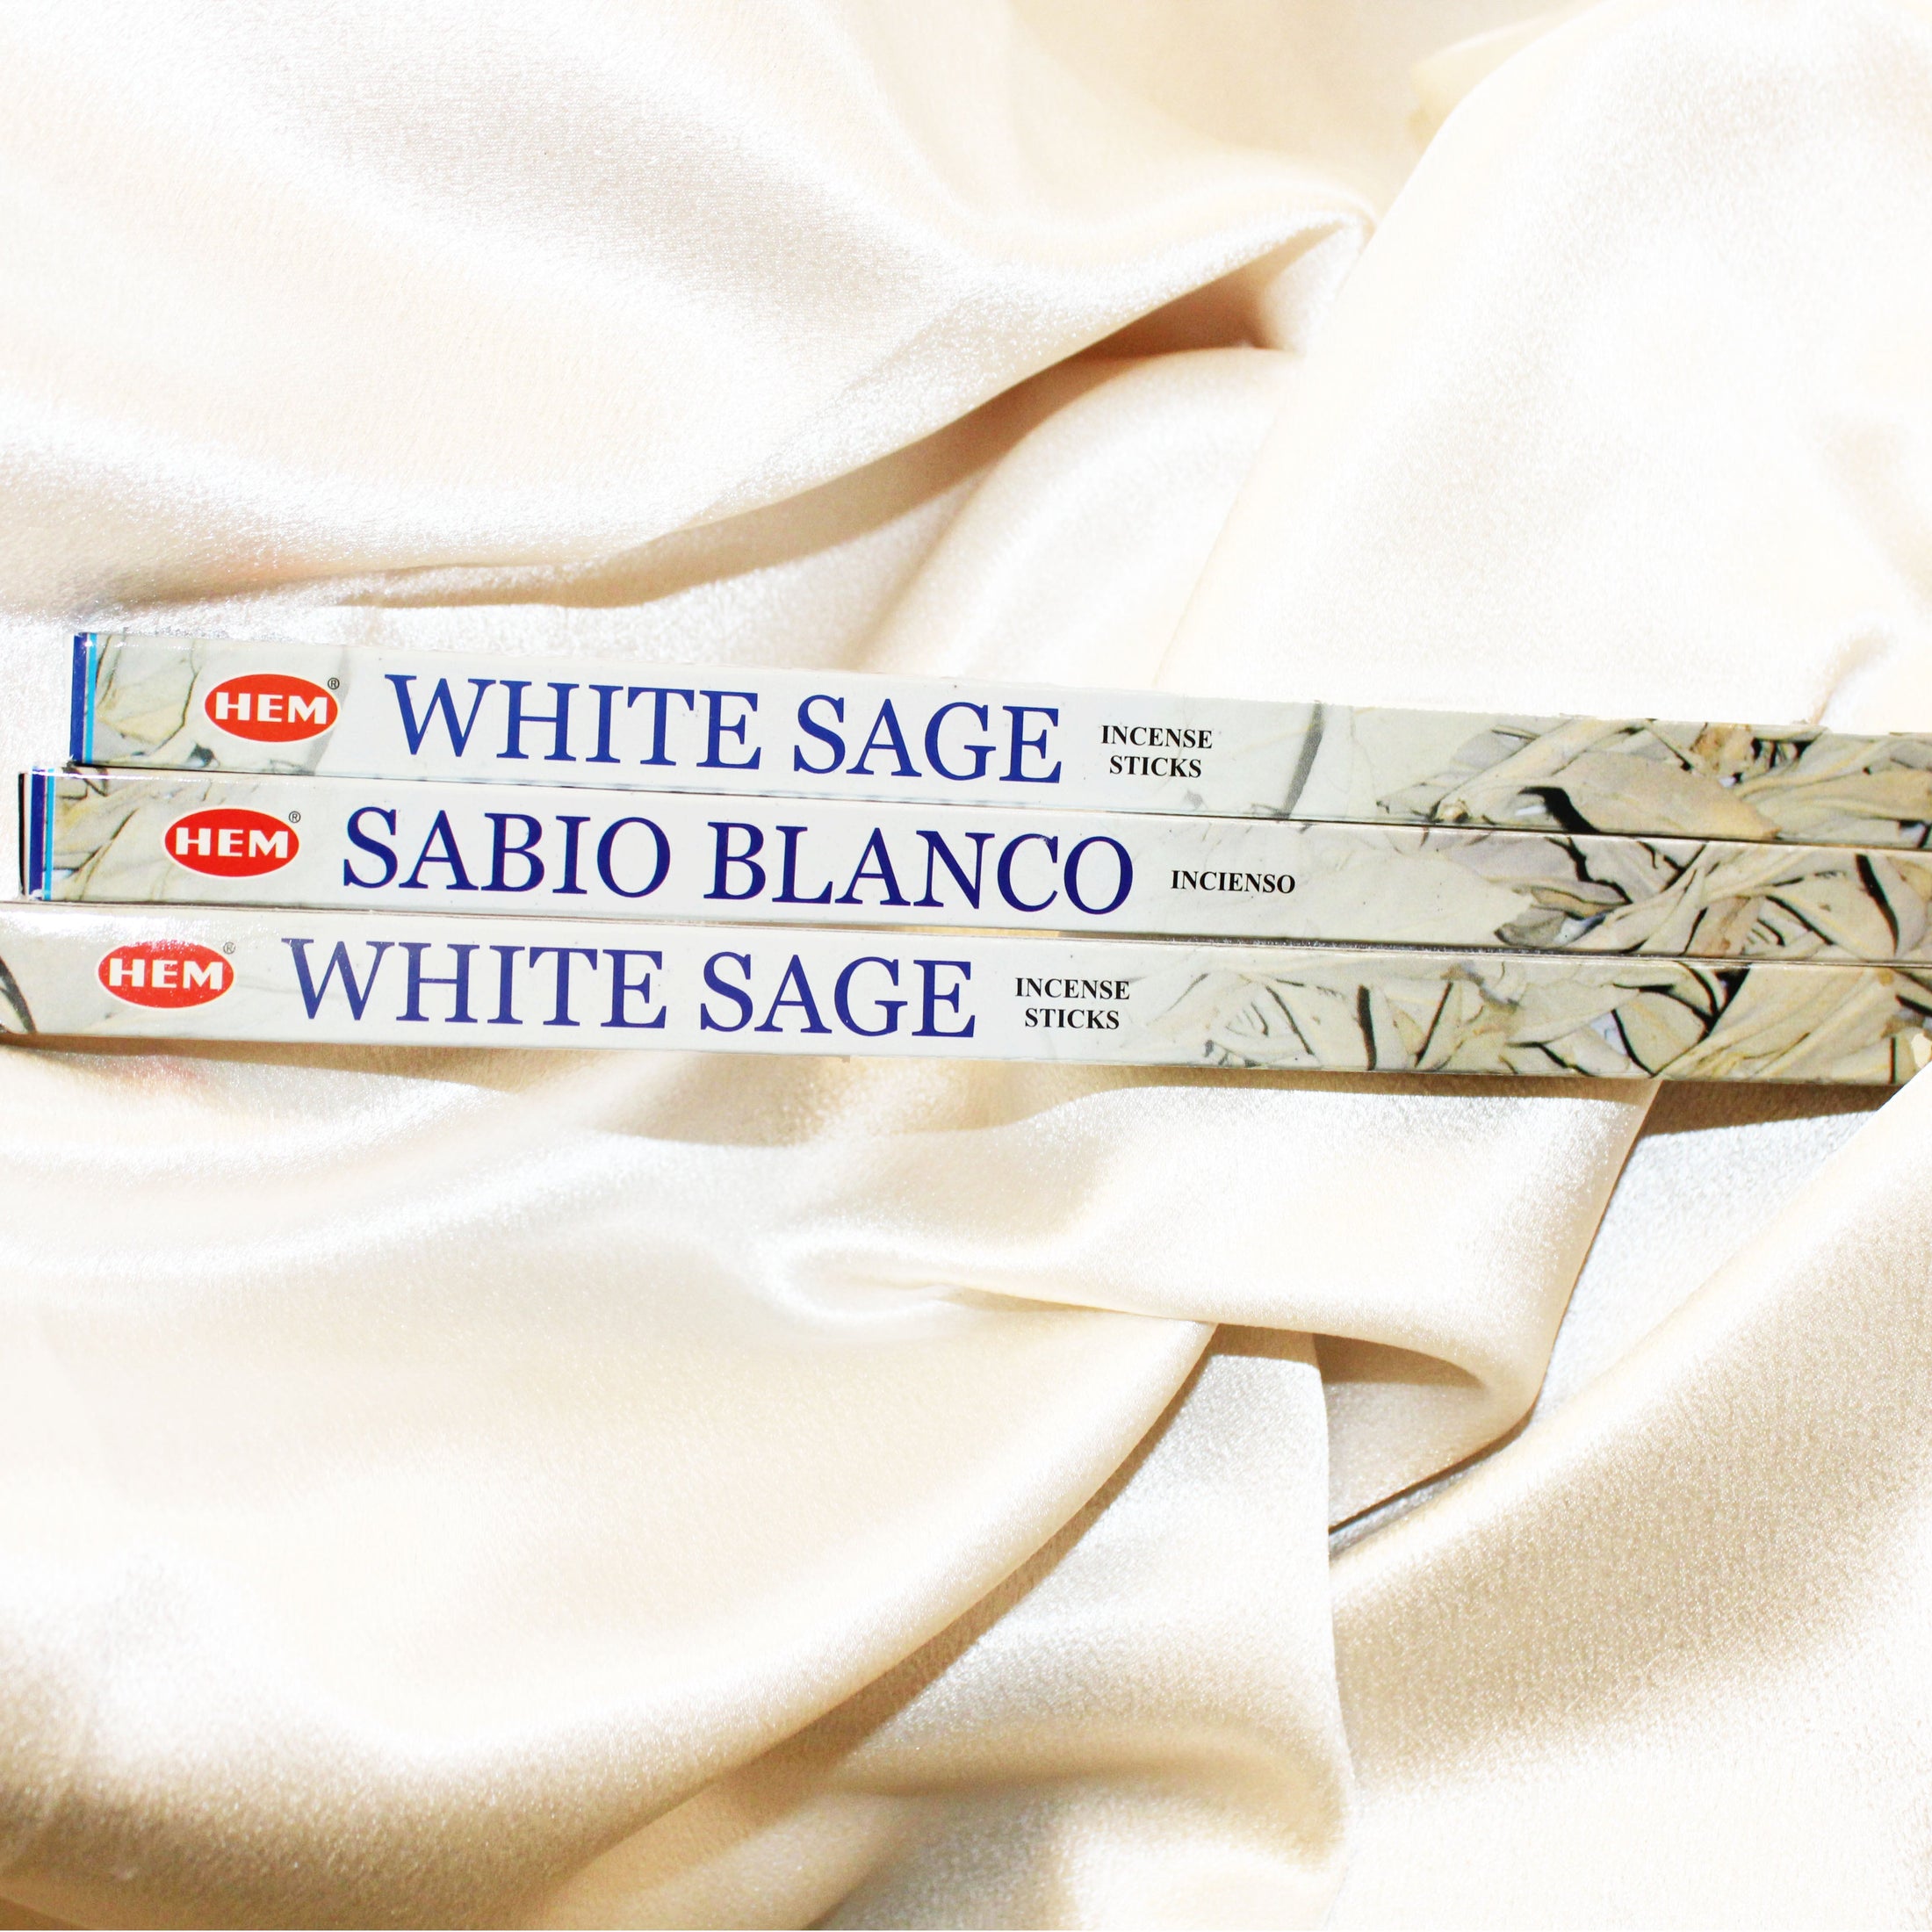 Hem- White Sage (Sabio Blanco) Incense (Incienso) Sticks